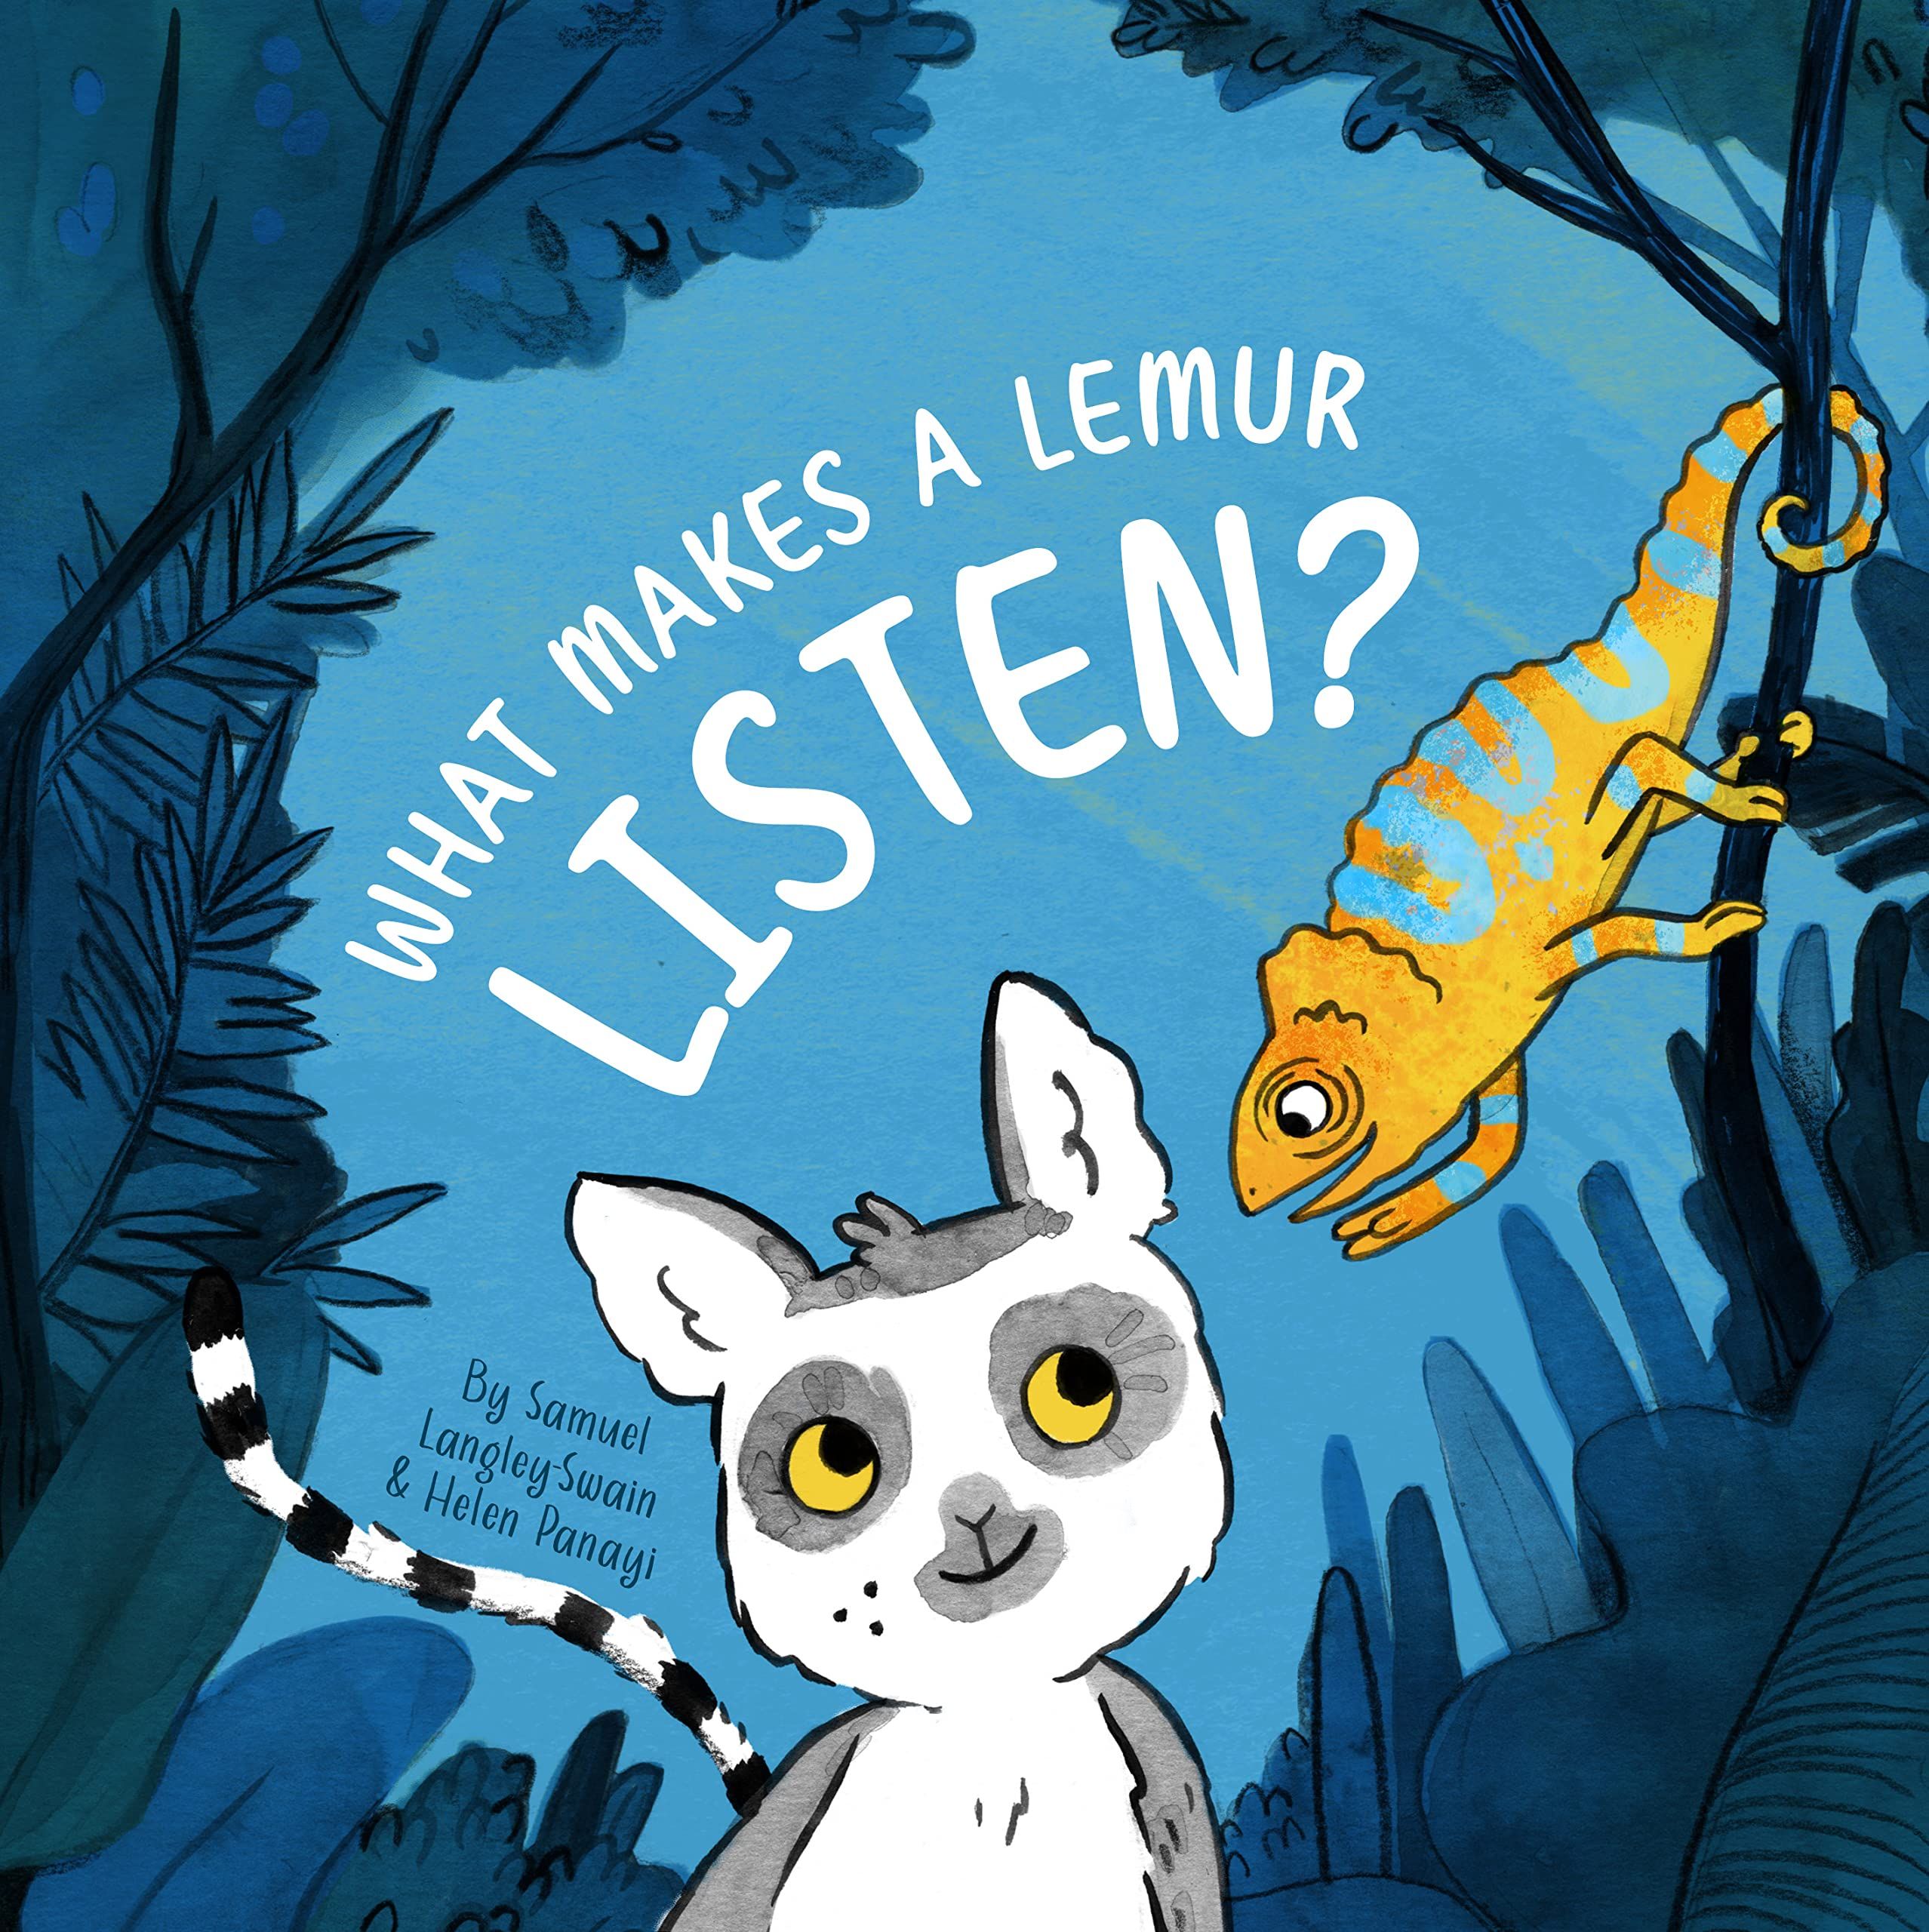 What Makes a Lemur Listen